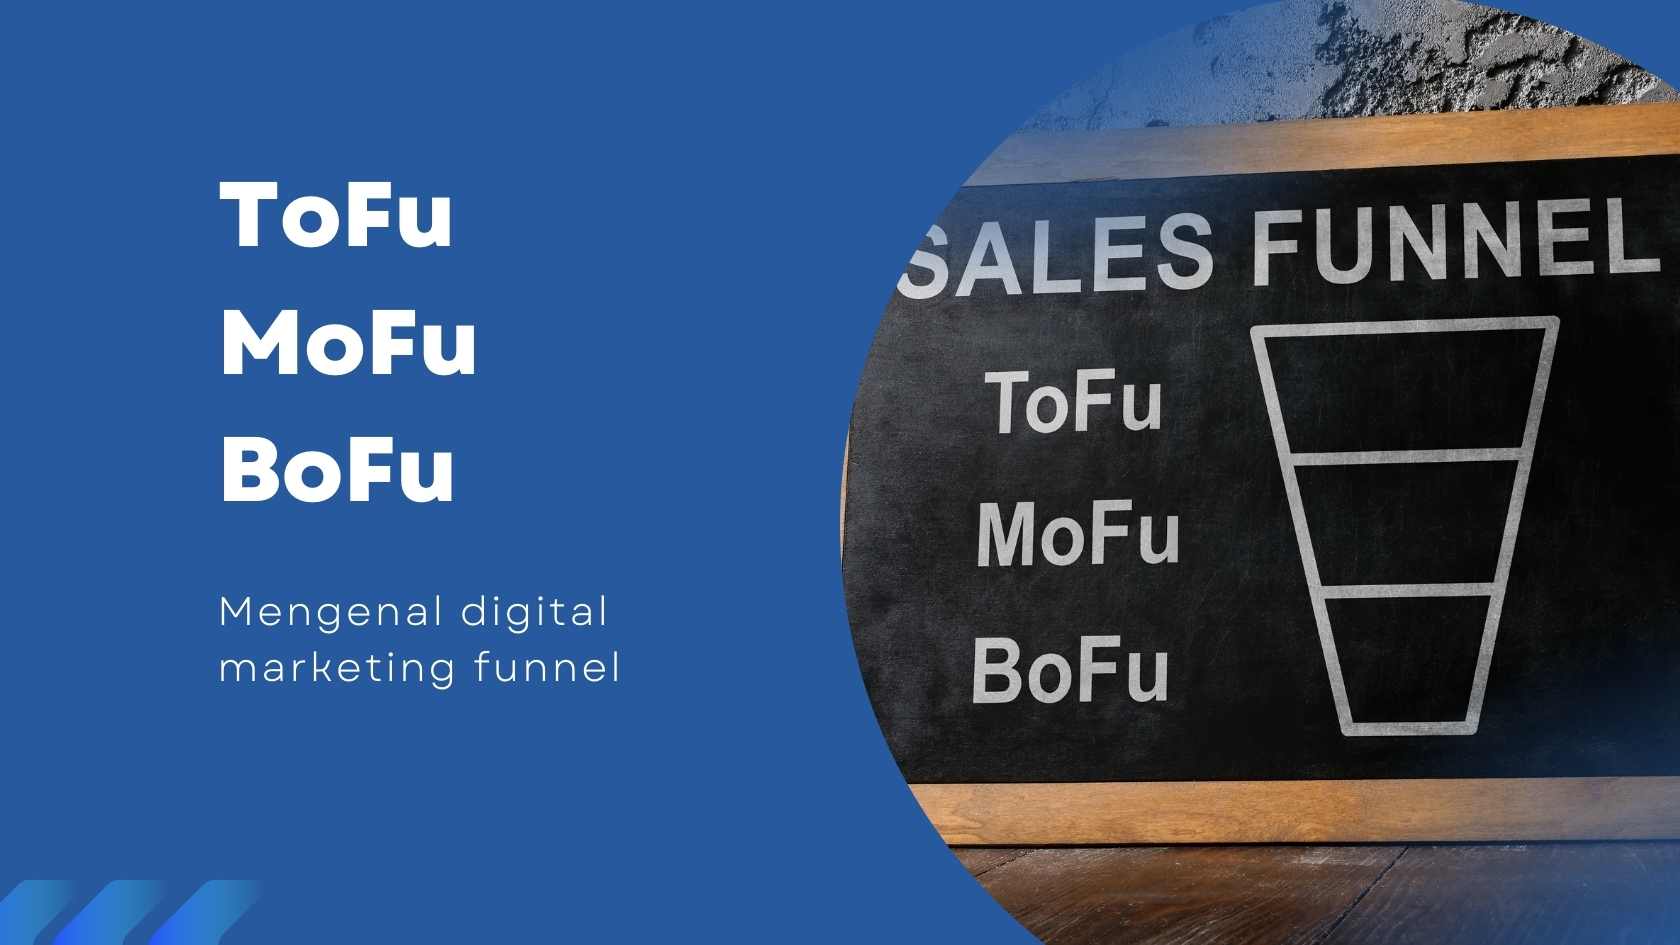 Mengenal Digital Marketing Funnel TOFU MOFU BOFU